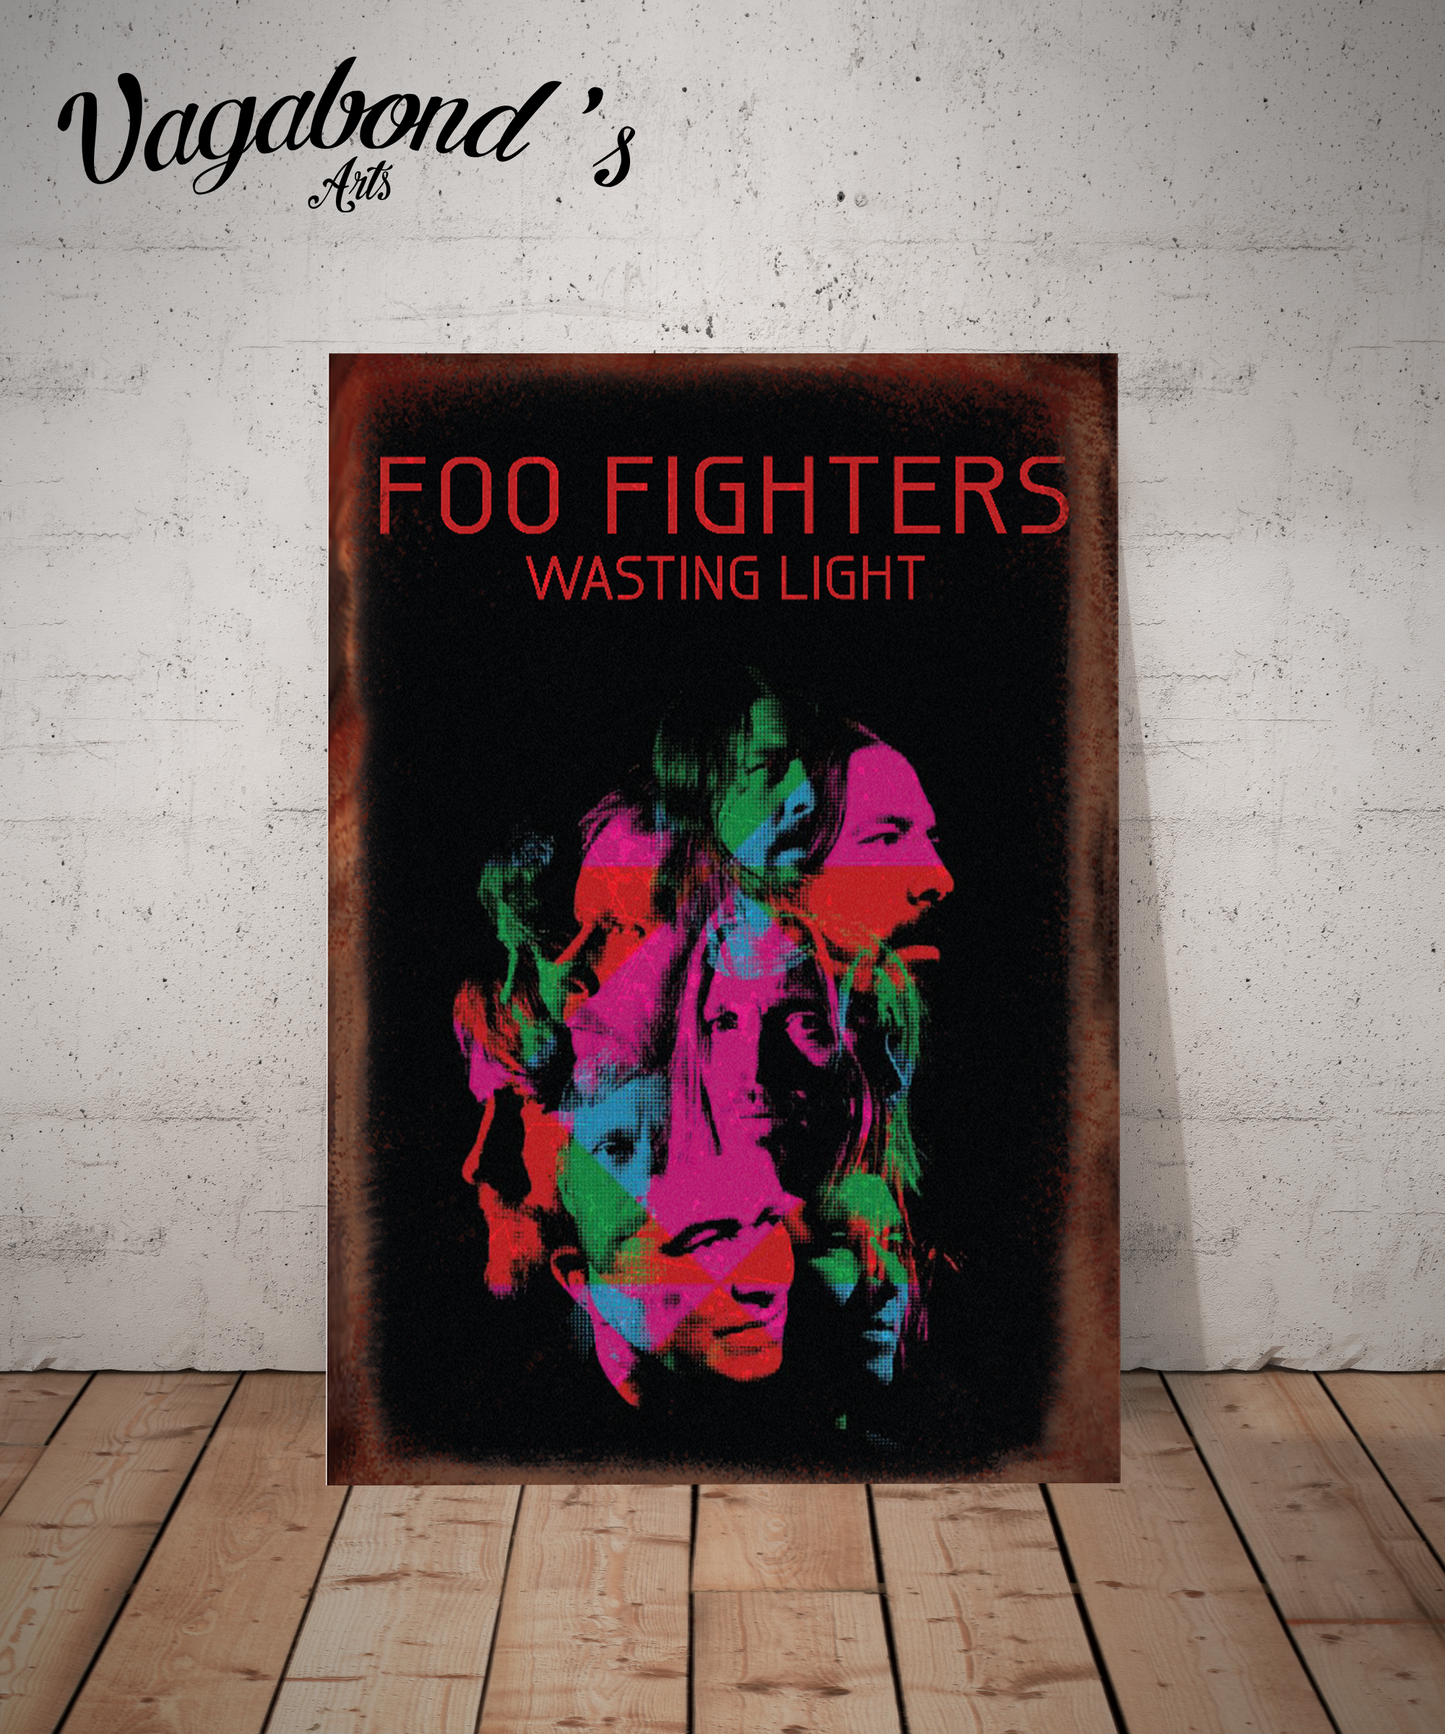 Vintage Foo Fighters Metal Sign - Vagabonds Arts 